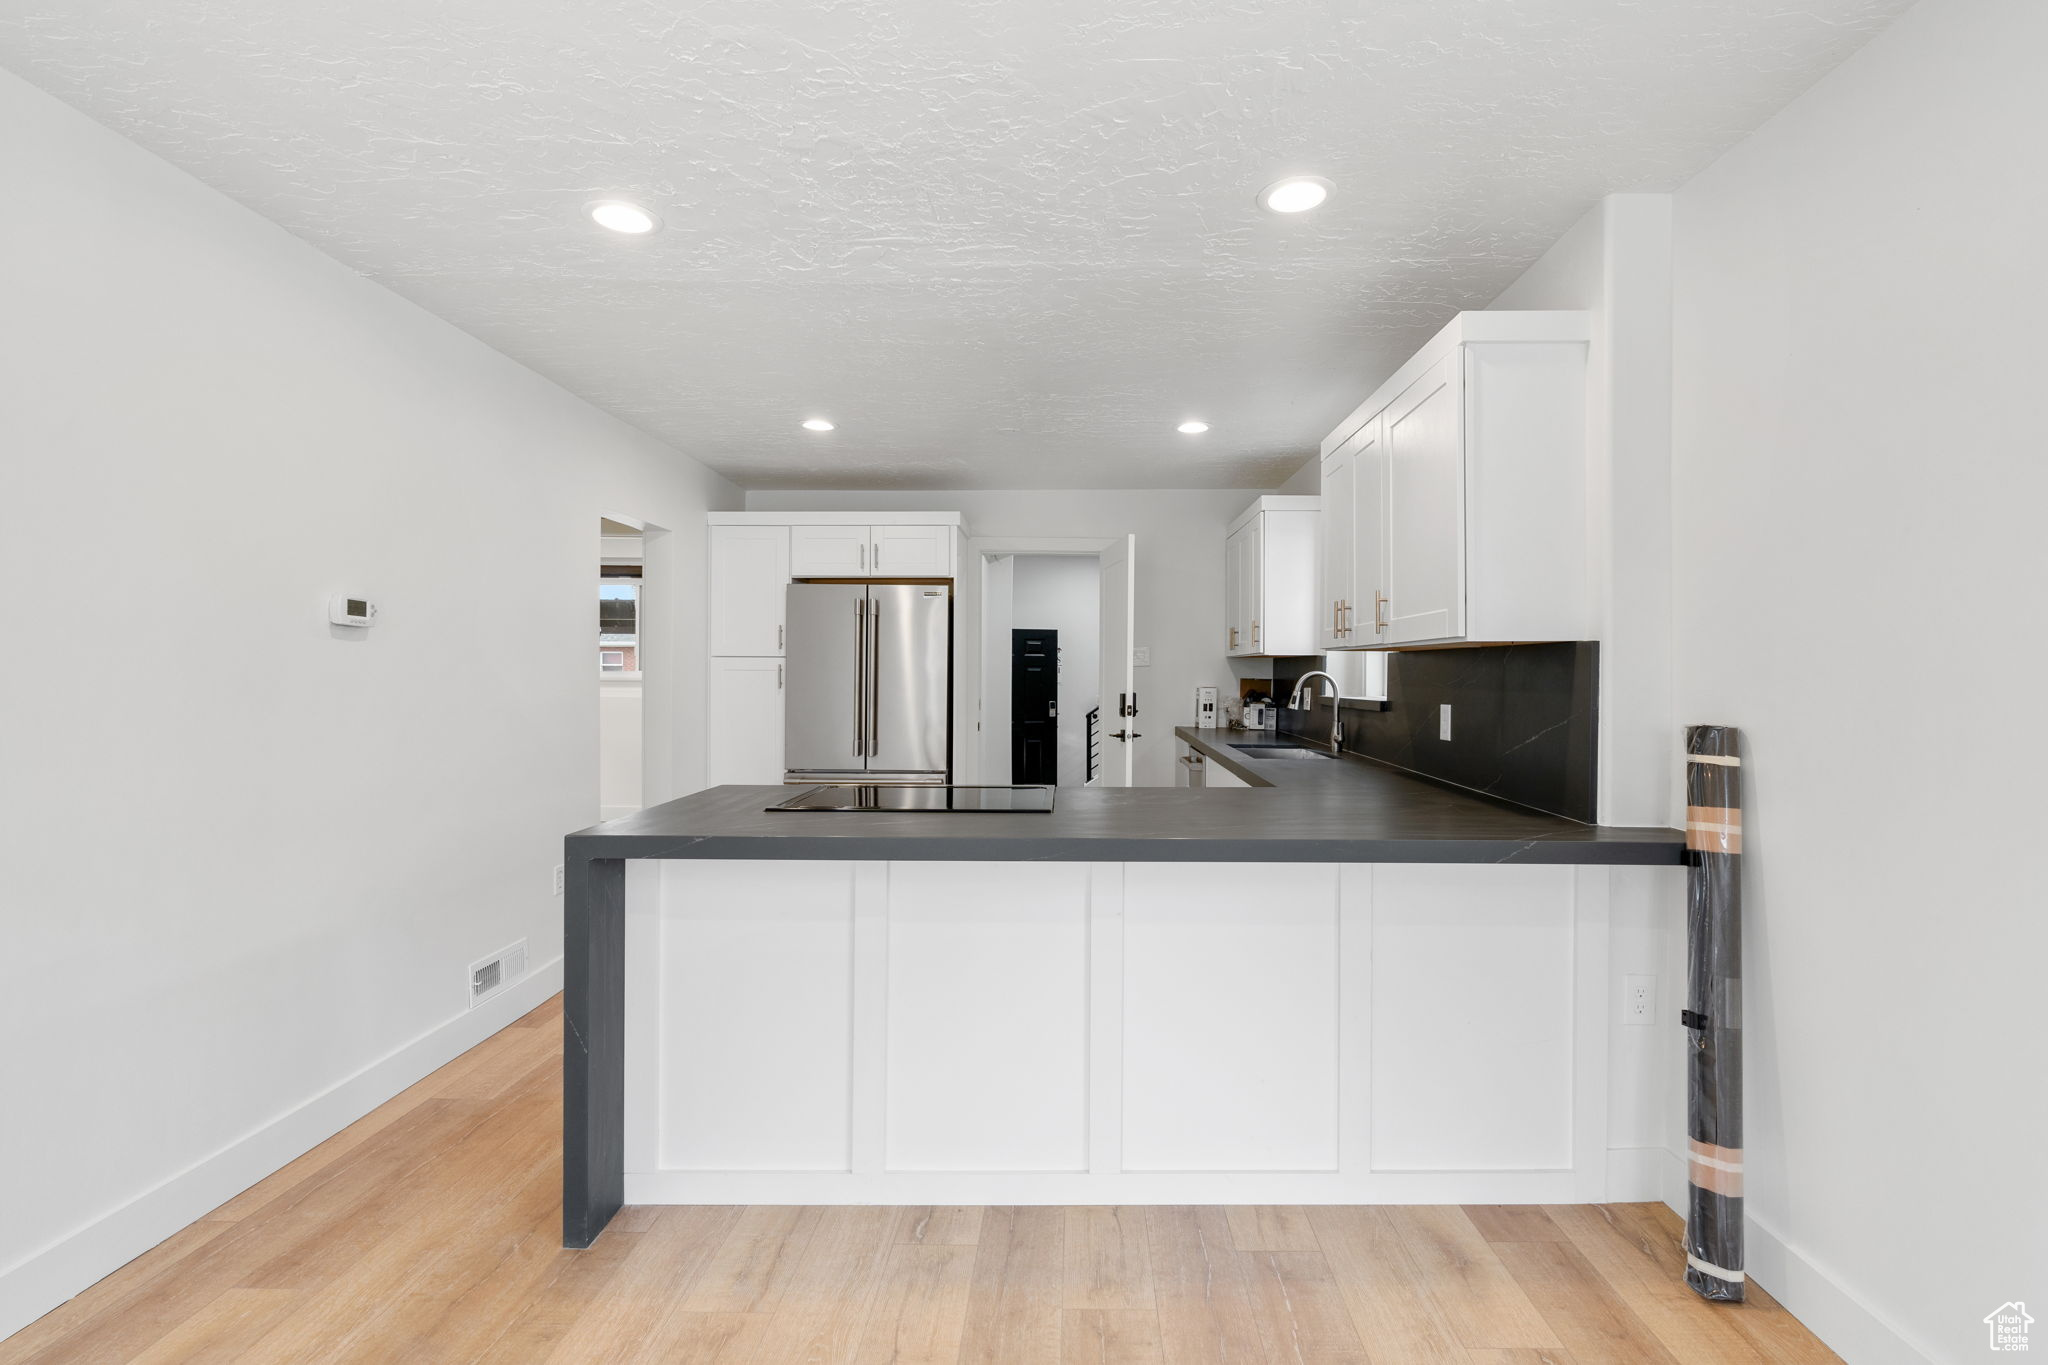 Kitchen with white cabinets, backsplash, high end fridge, and light wood-type flooring